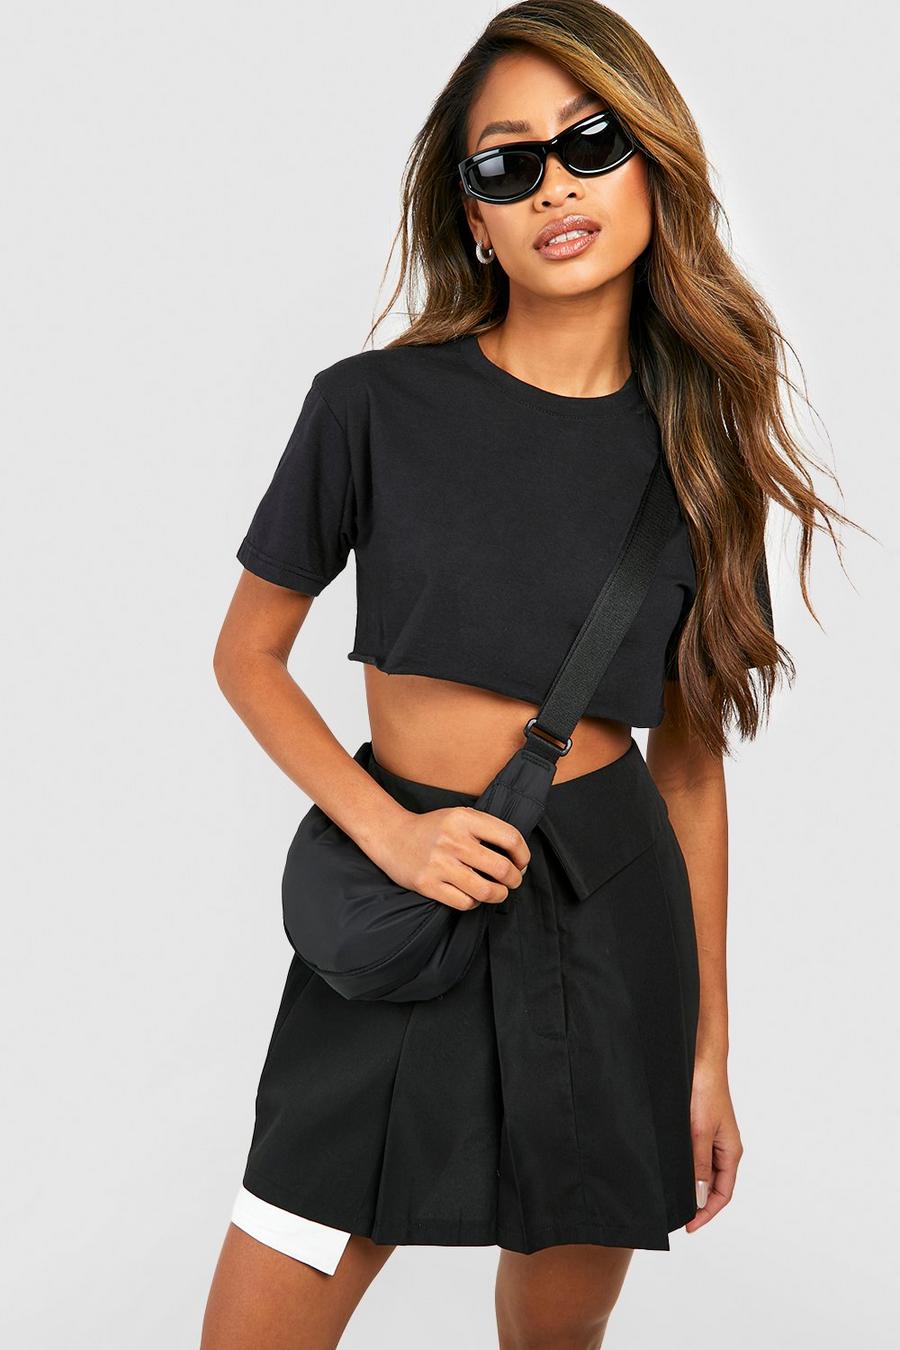 Black Fold Over Woven Pleated Tennis Skirt